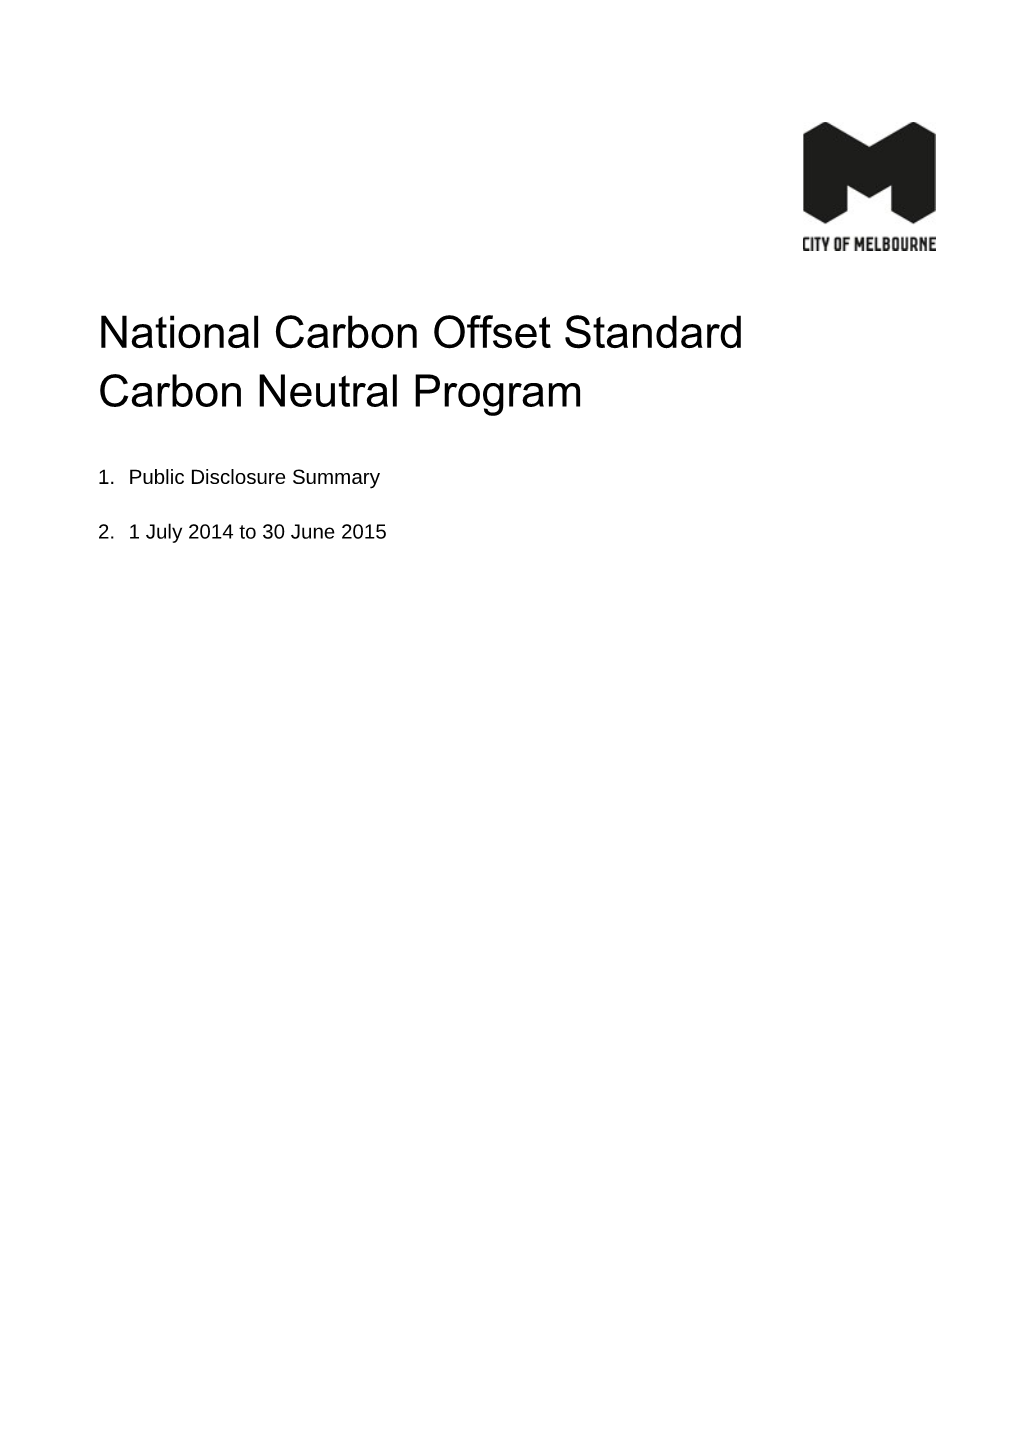 National Carbon Offset Standard Carbon Neutral Program